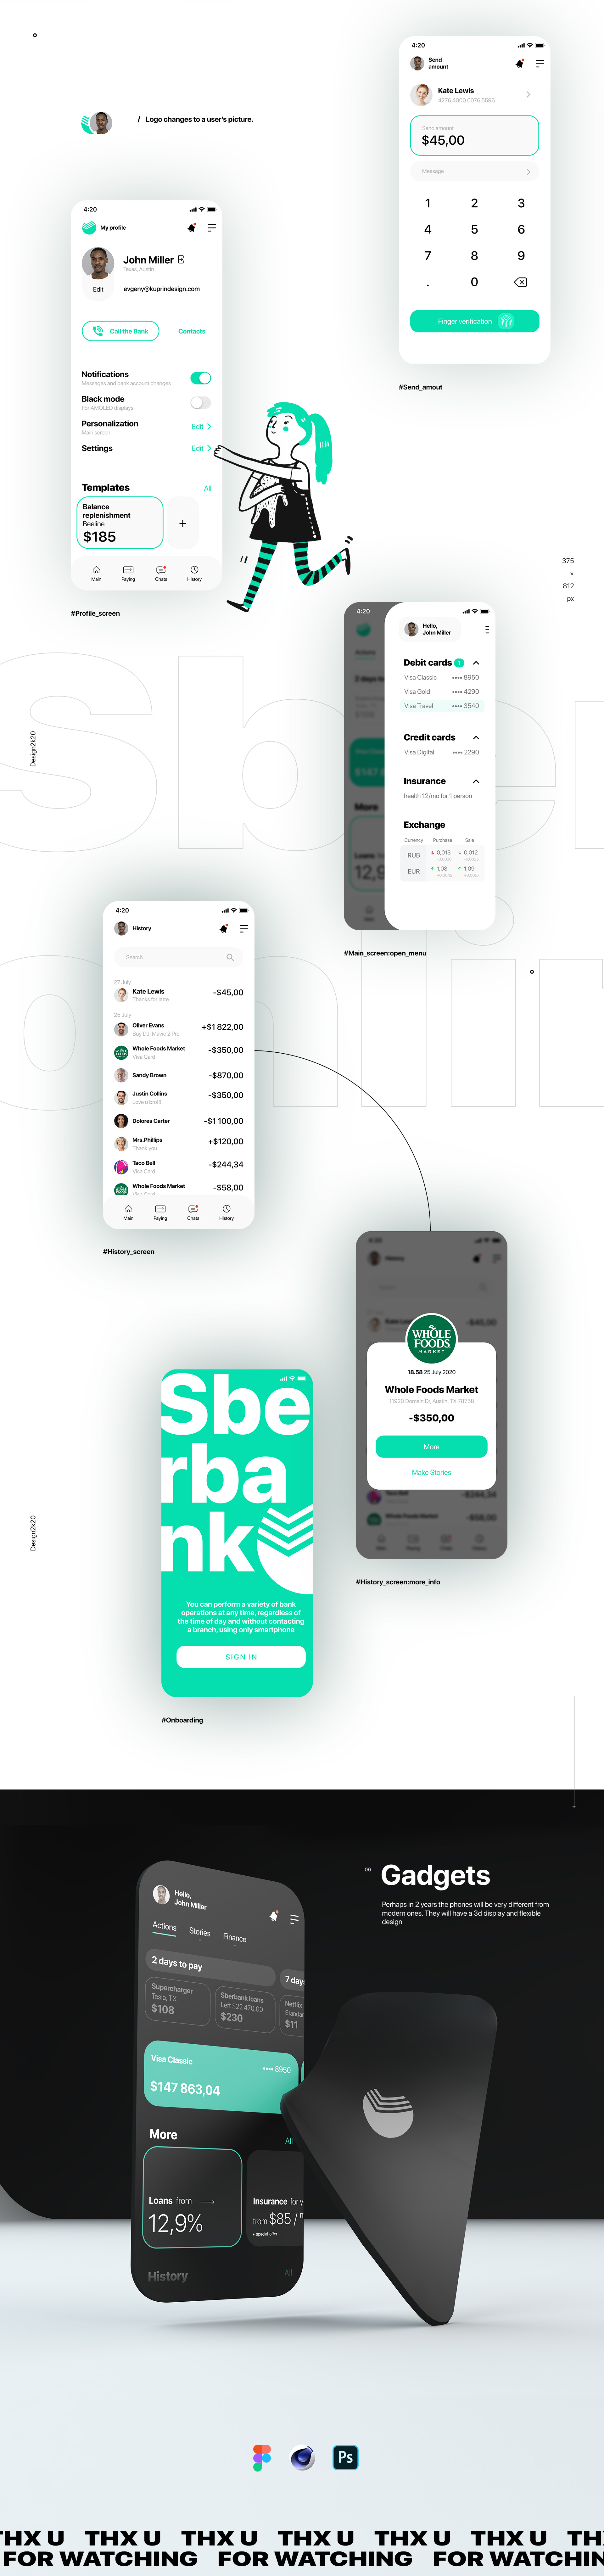 Banking app